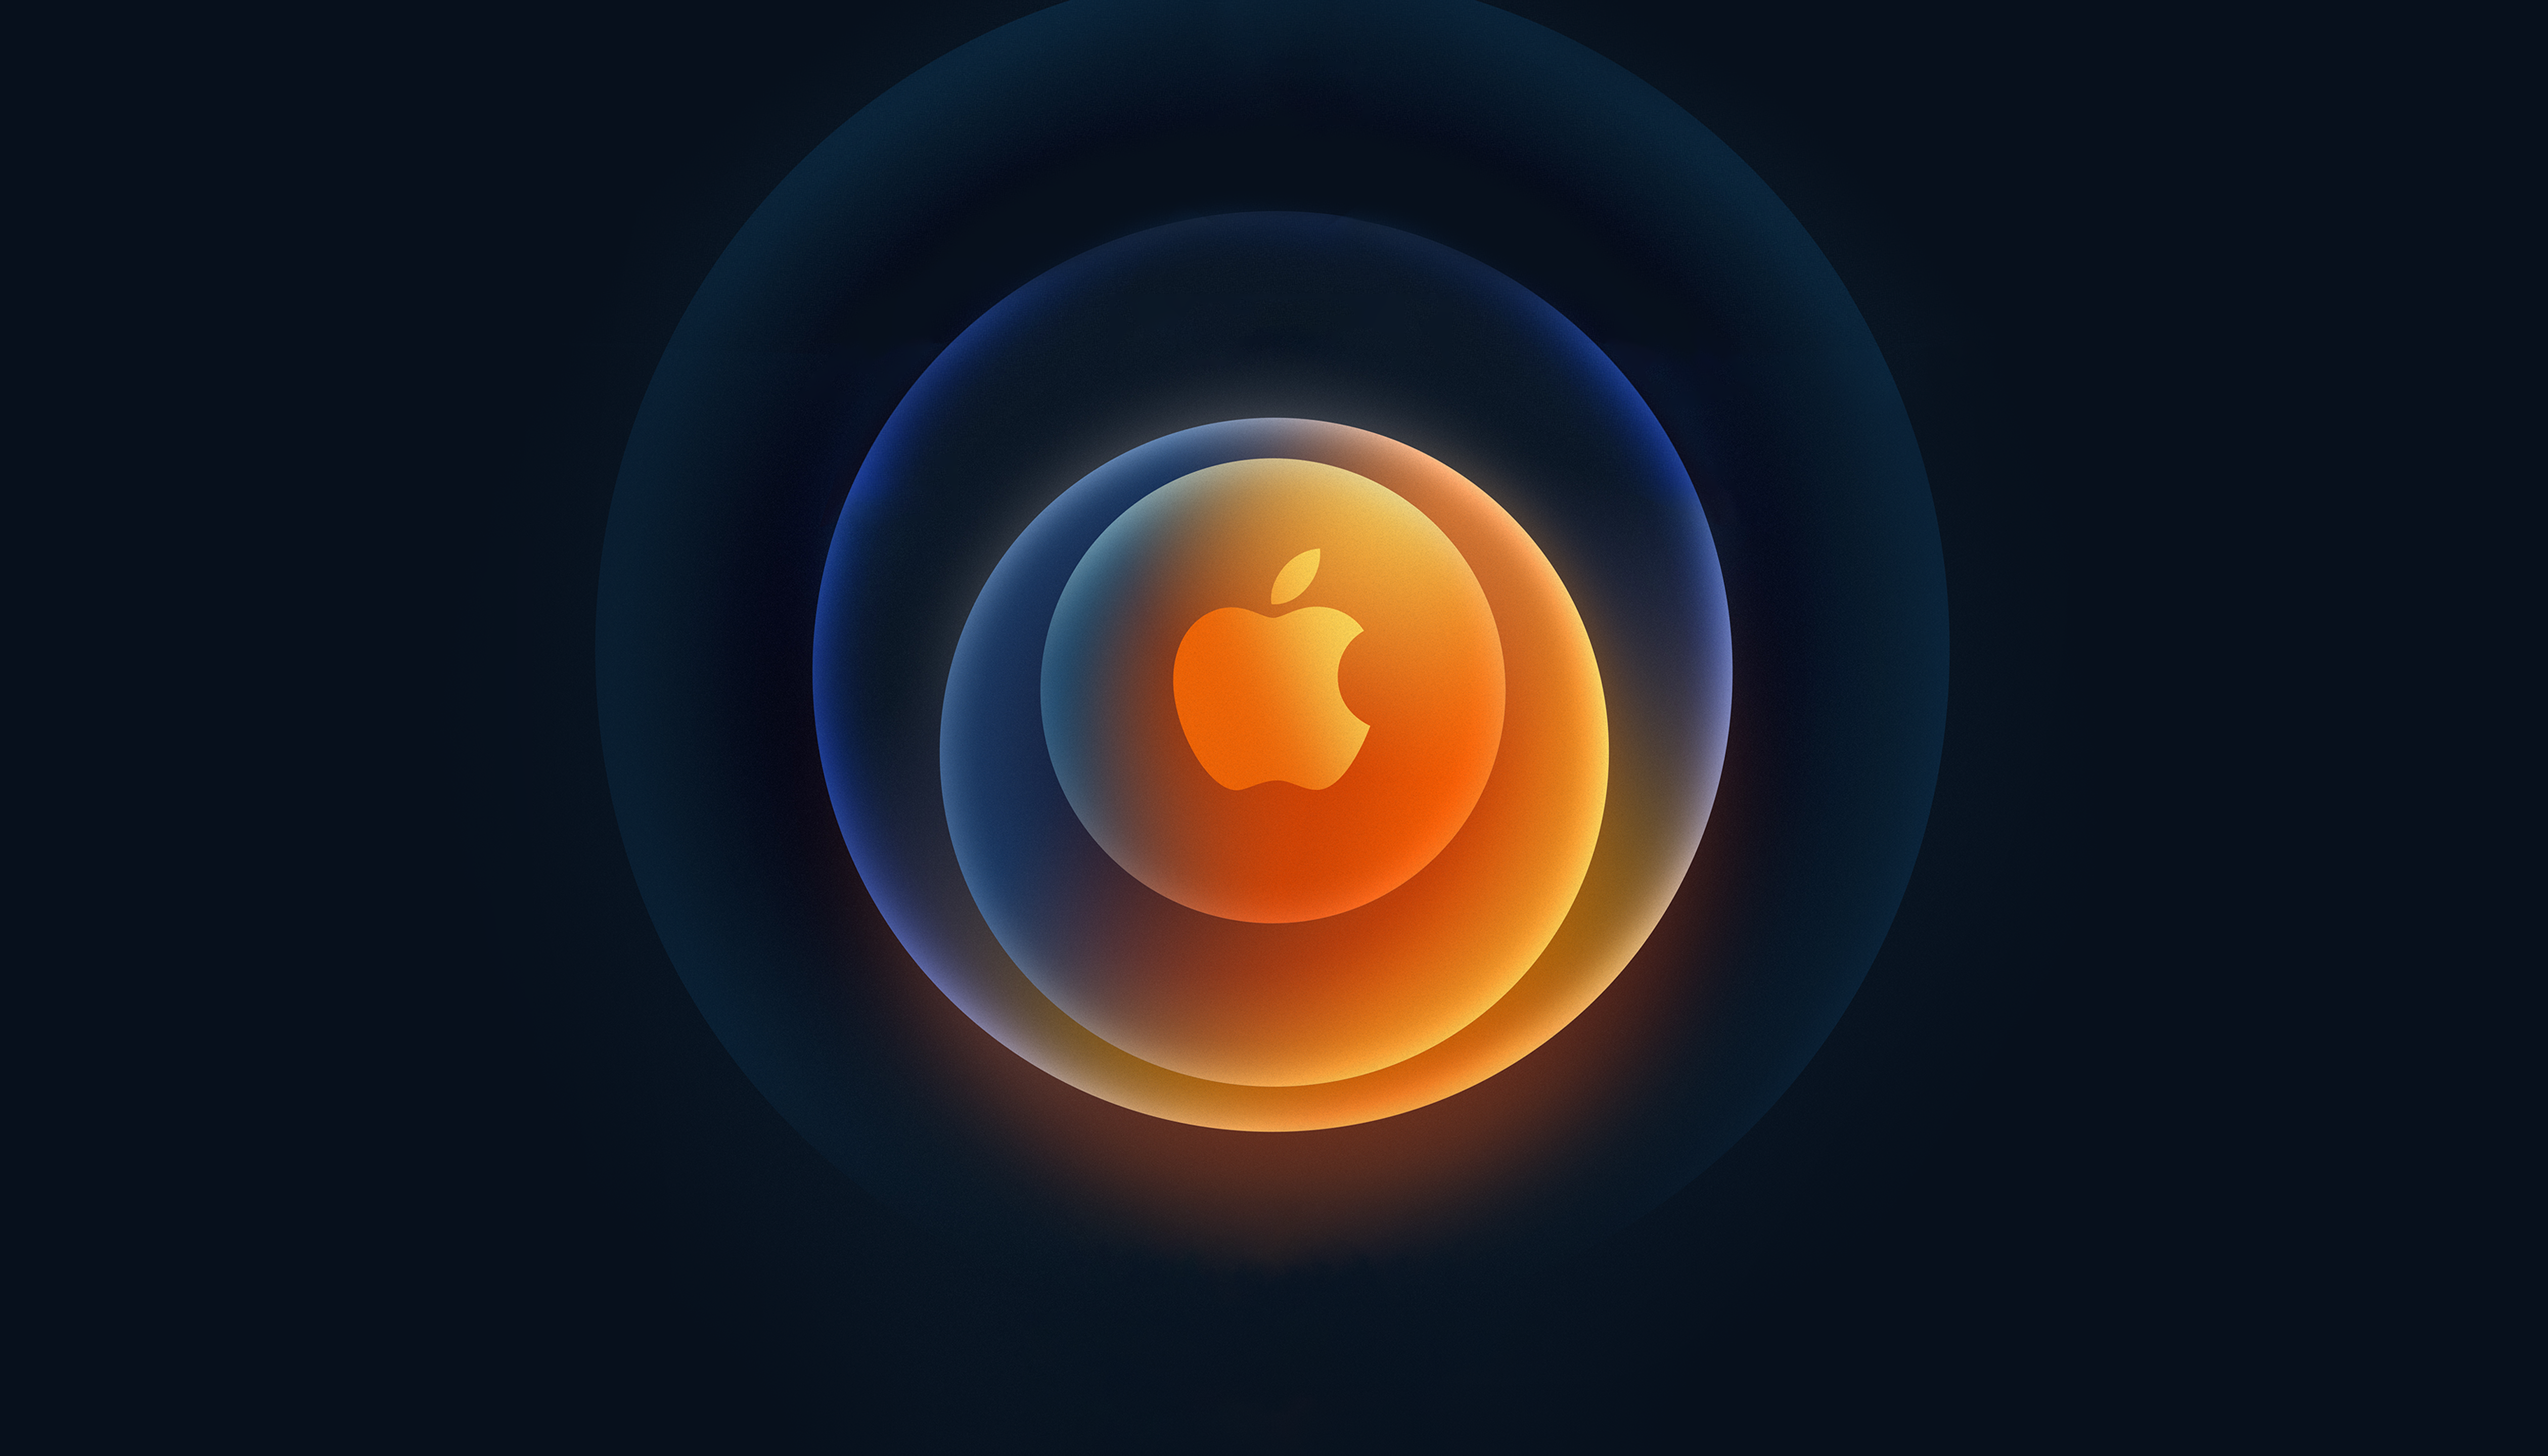 stunning Apple event wallpaper